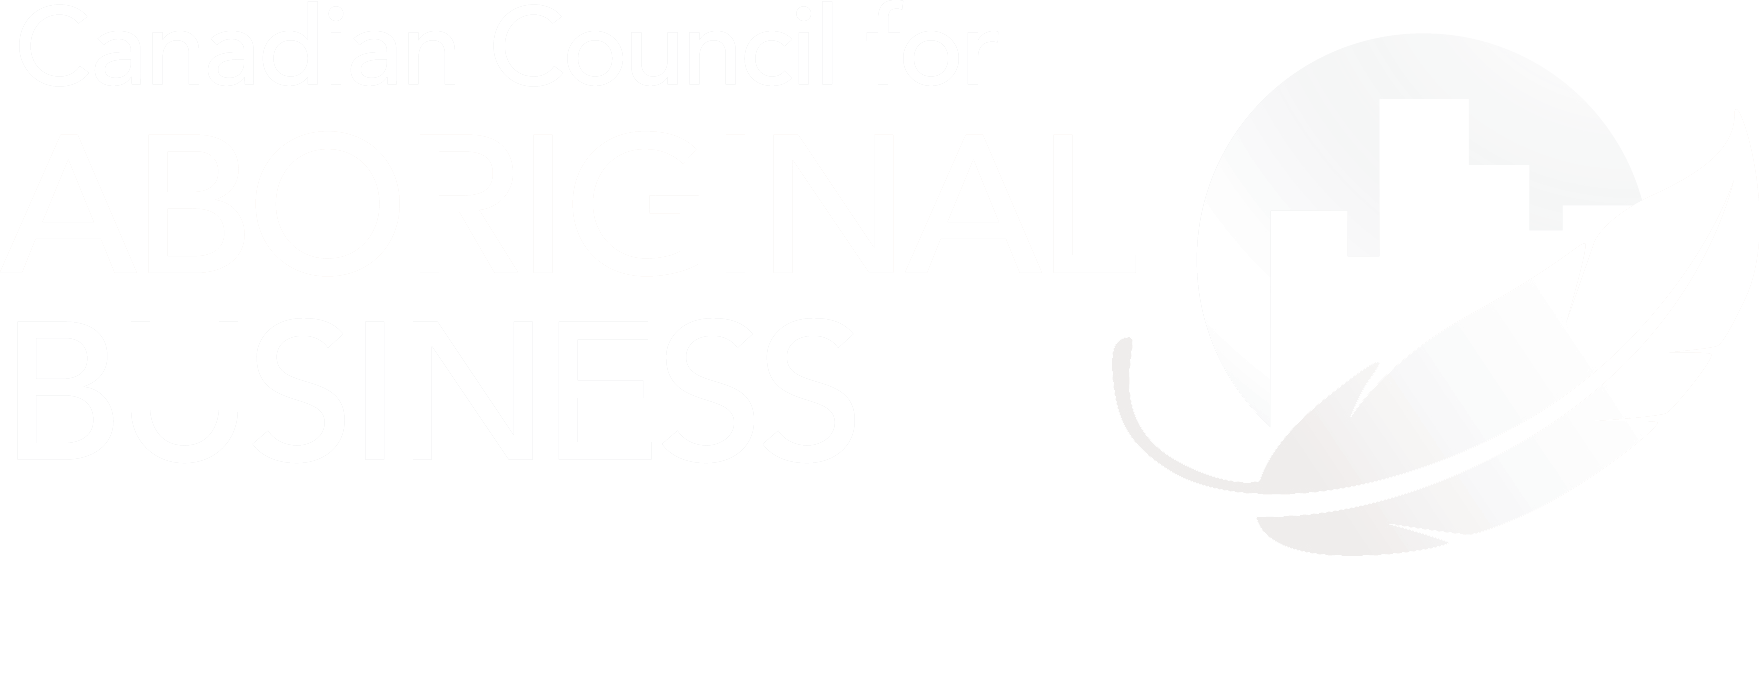 Canadian Council for Aboriginal Business logo